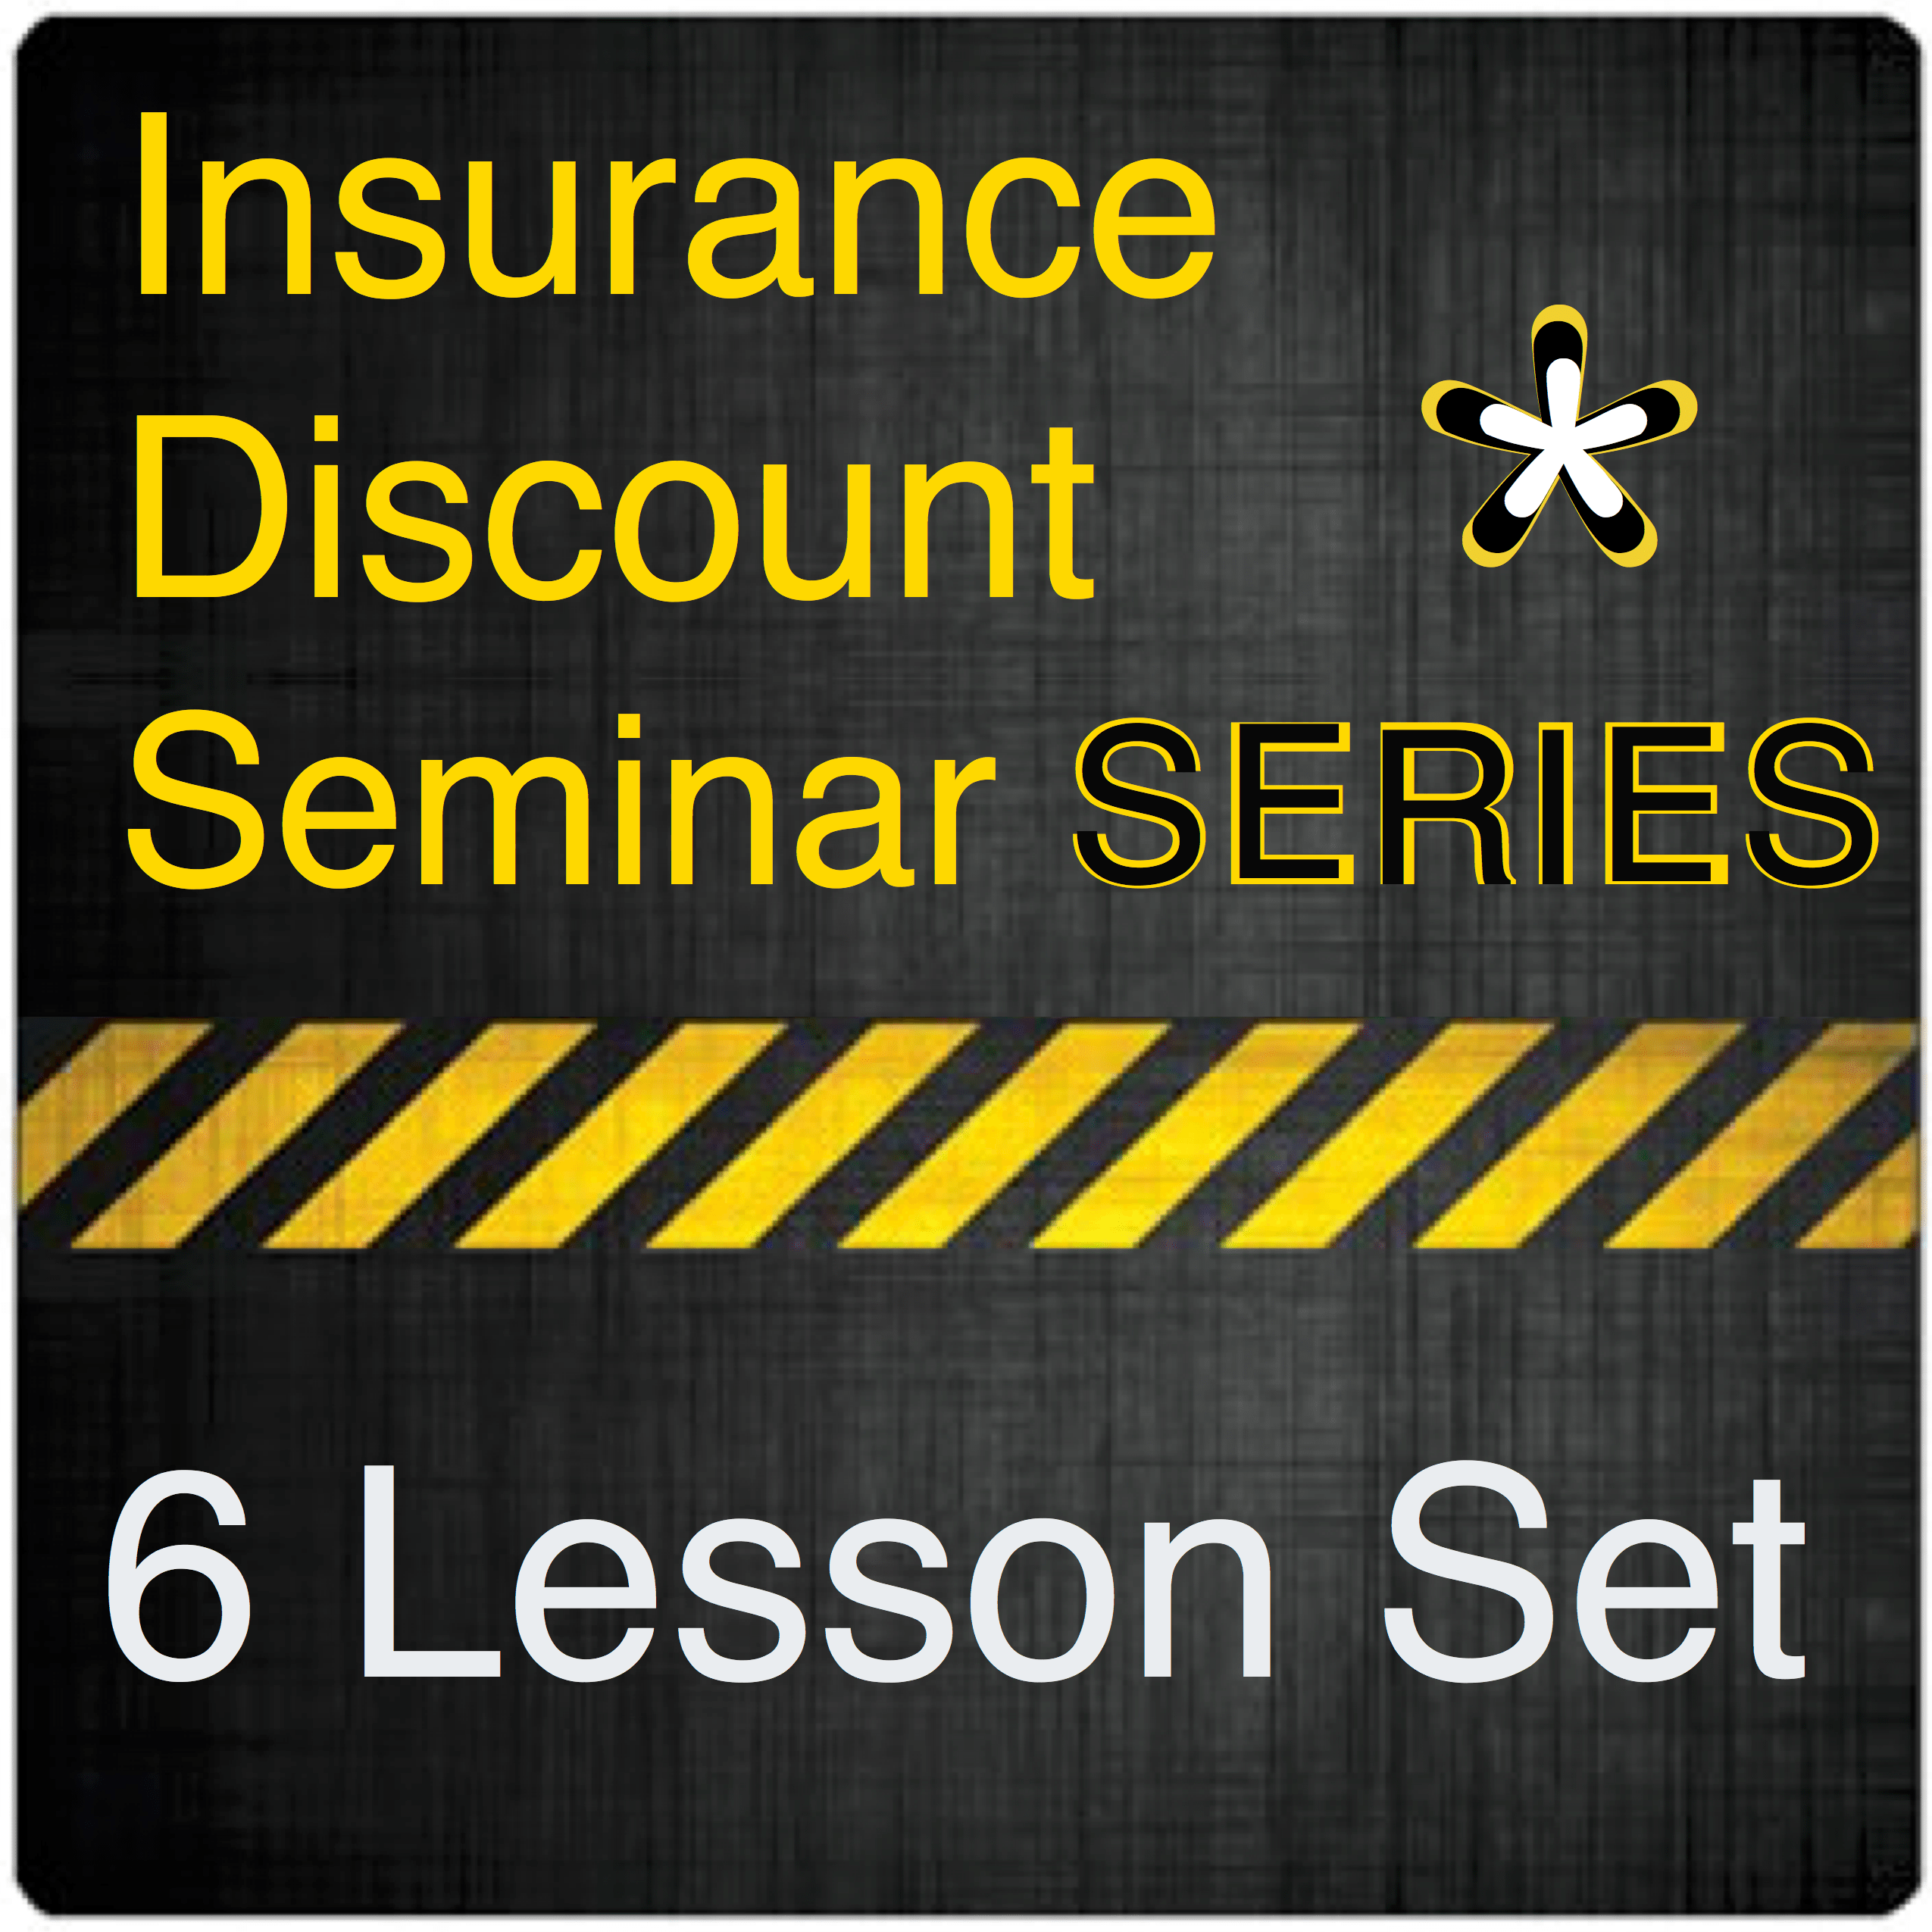 insurance-discount-seminar-series-6-lesson-set-yellow-drive-safe-ride